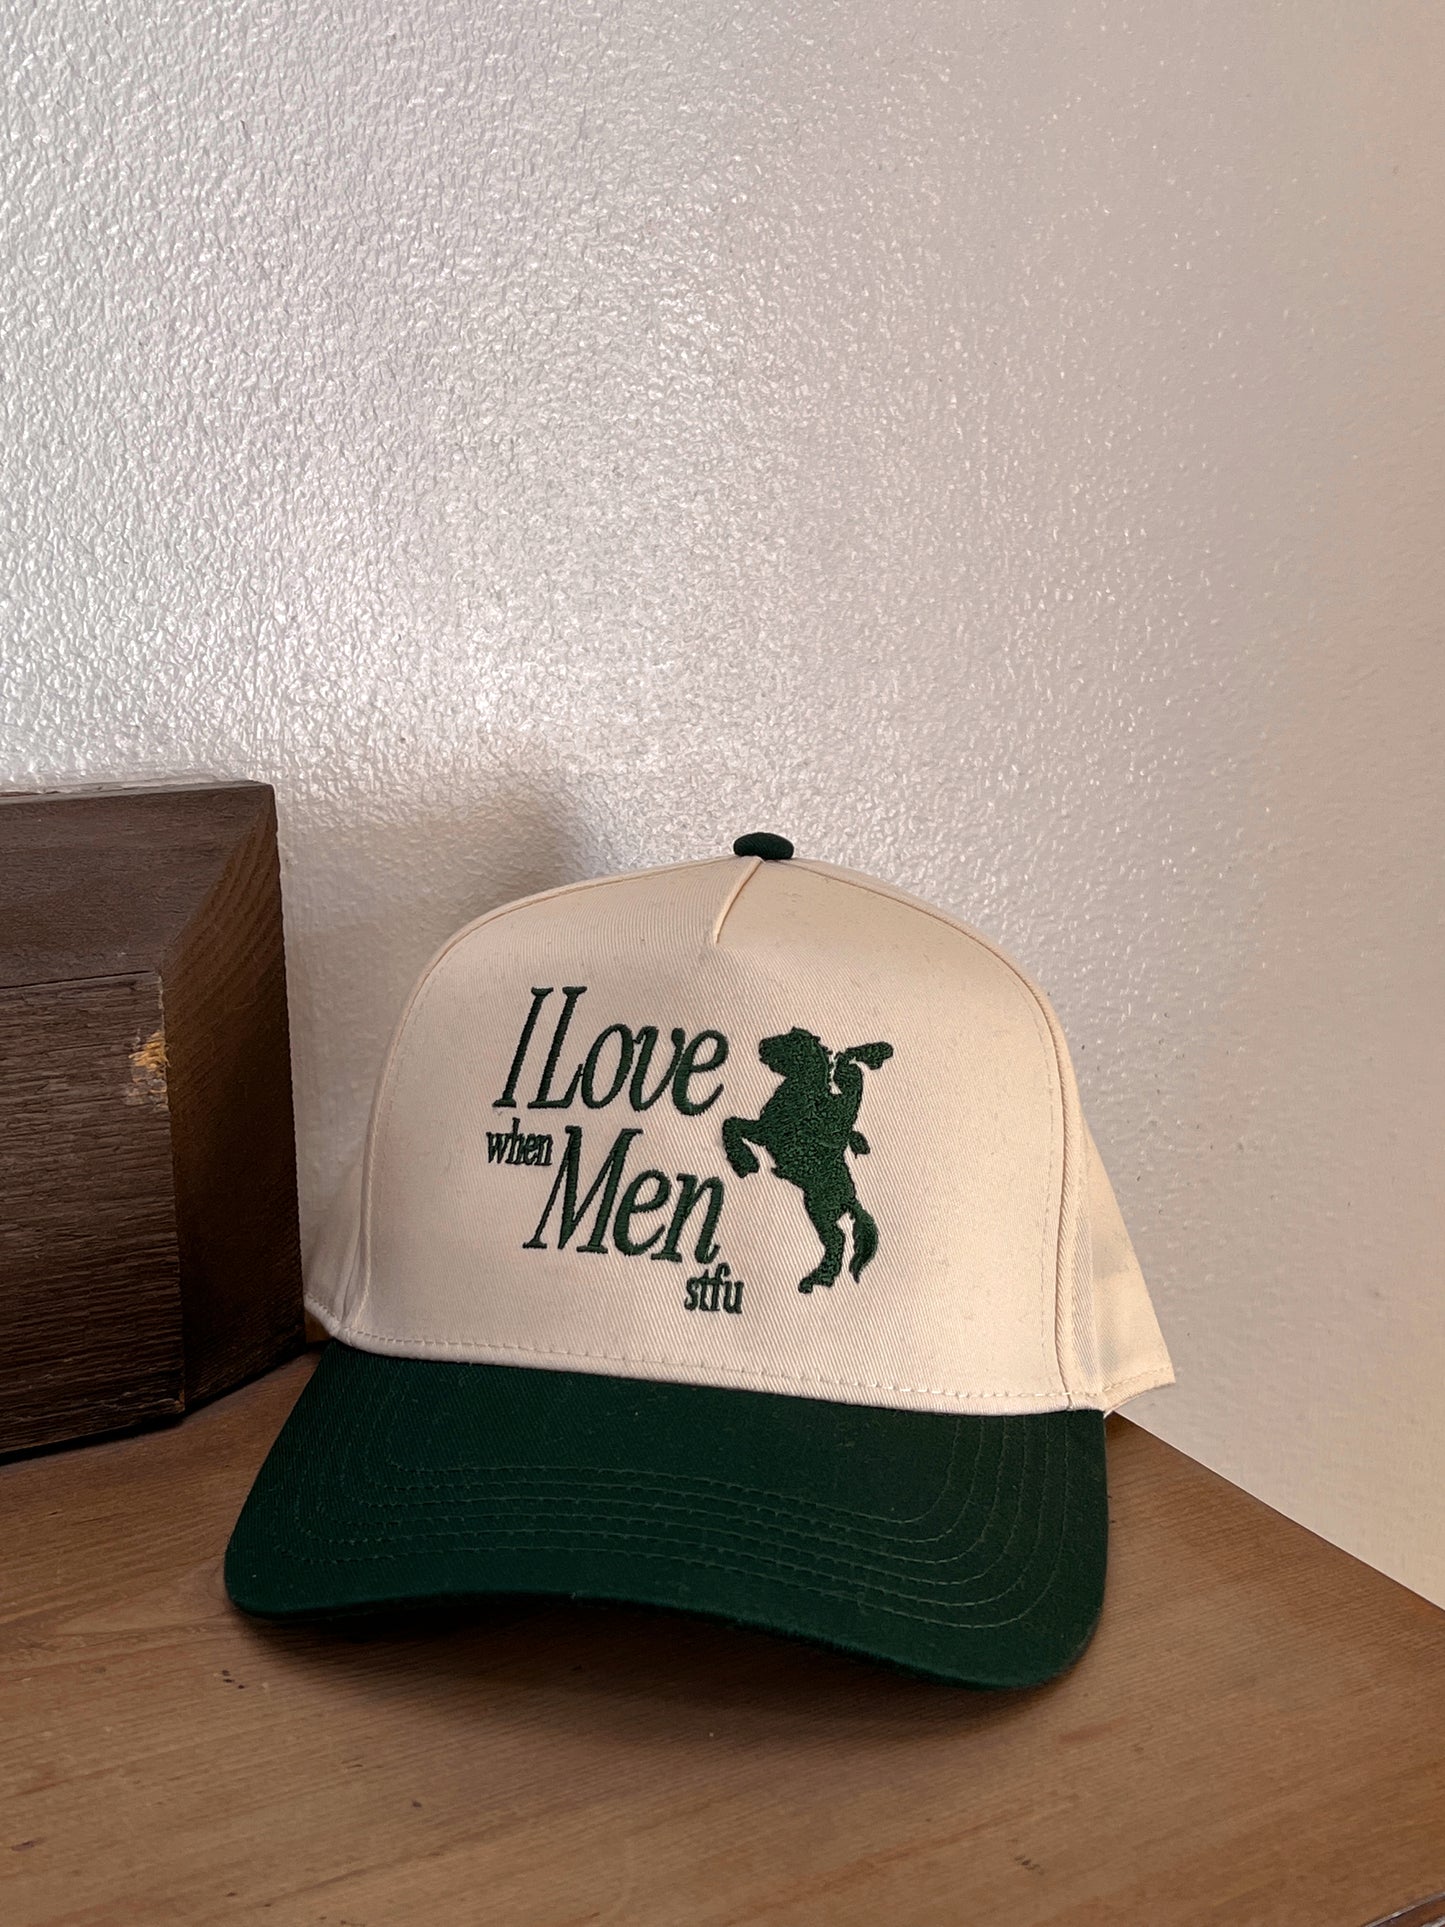 "I Love Men" Vintage Trucker Hat